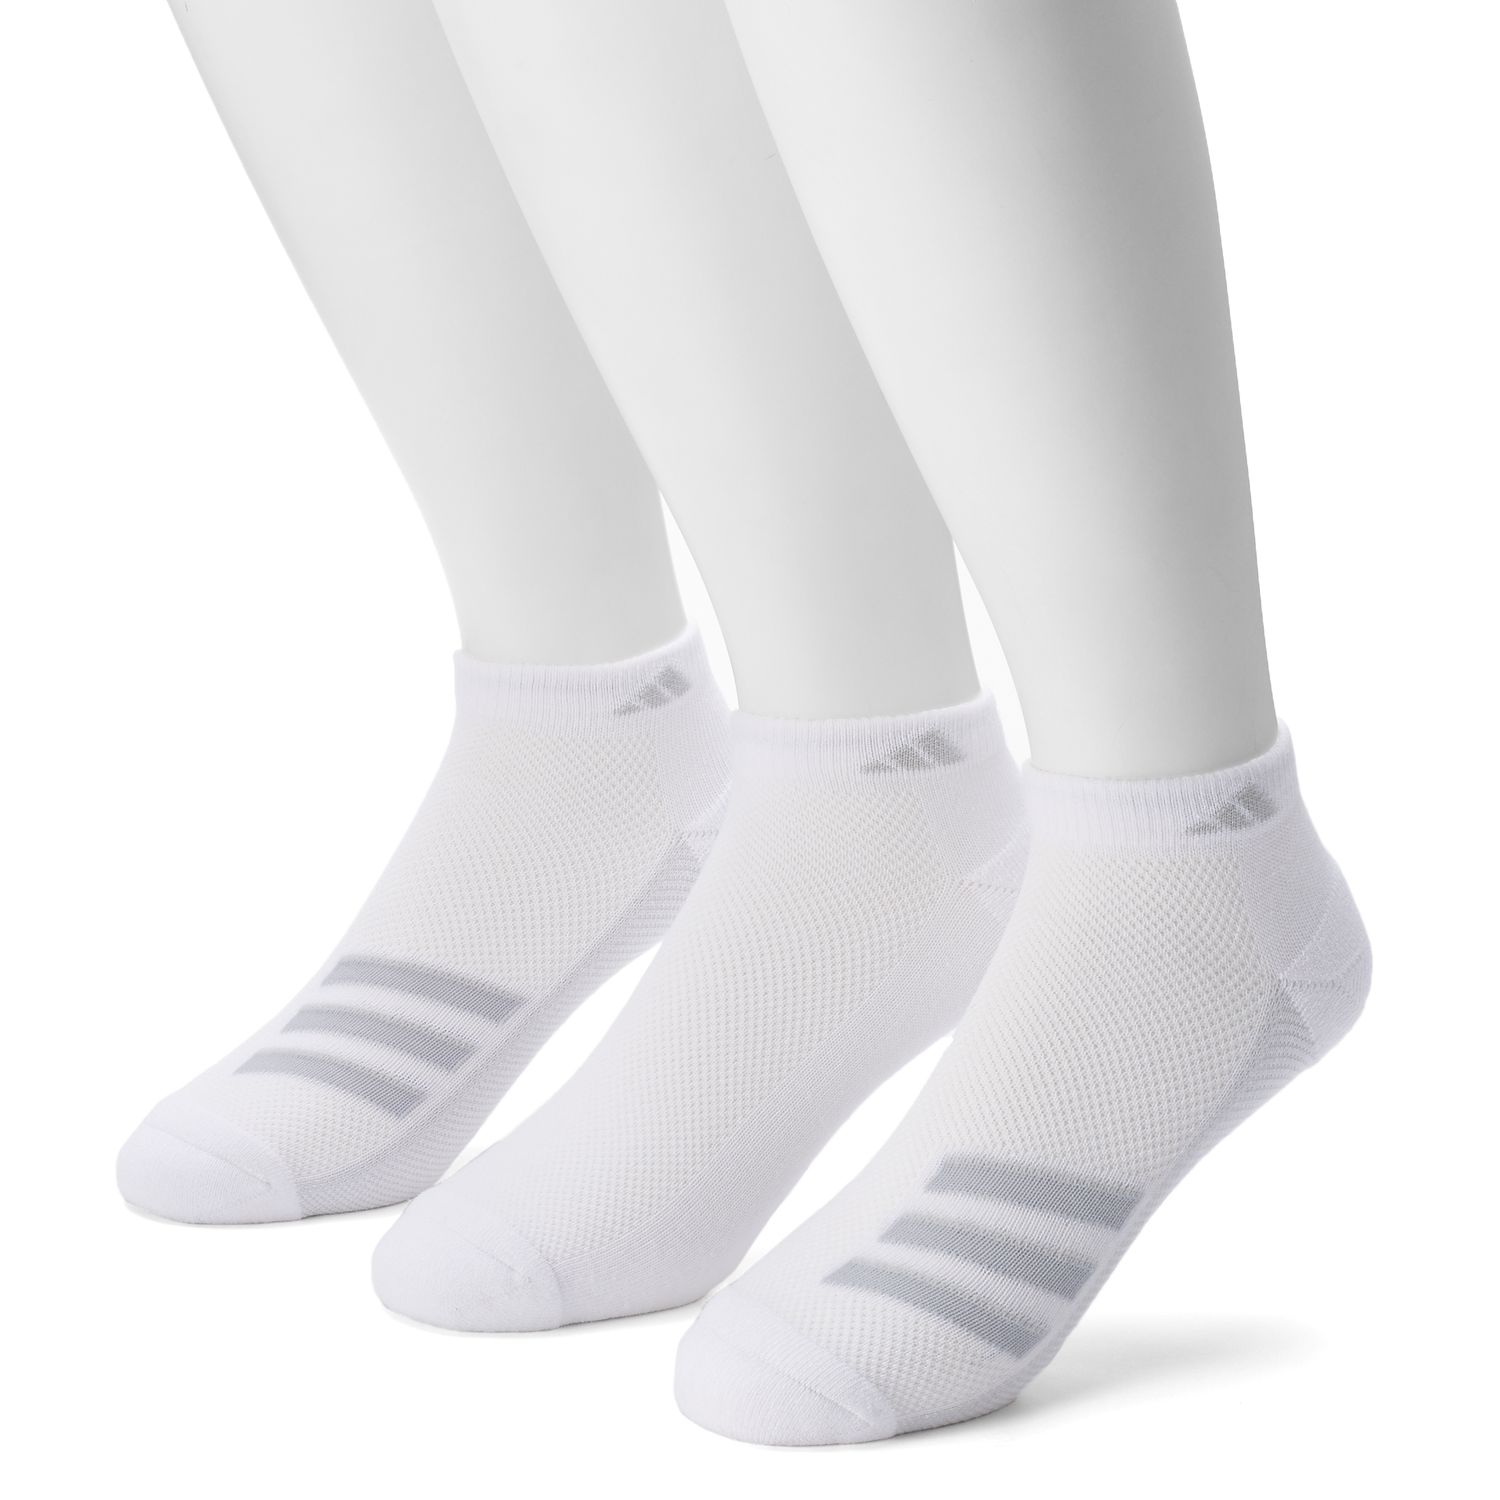 adidas climacool socks review